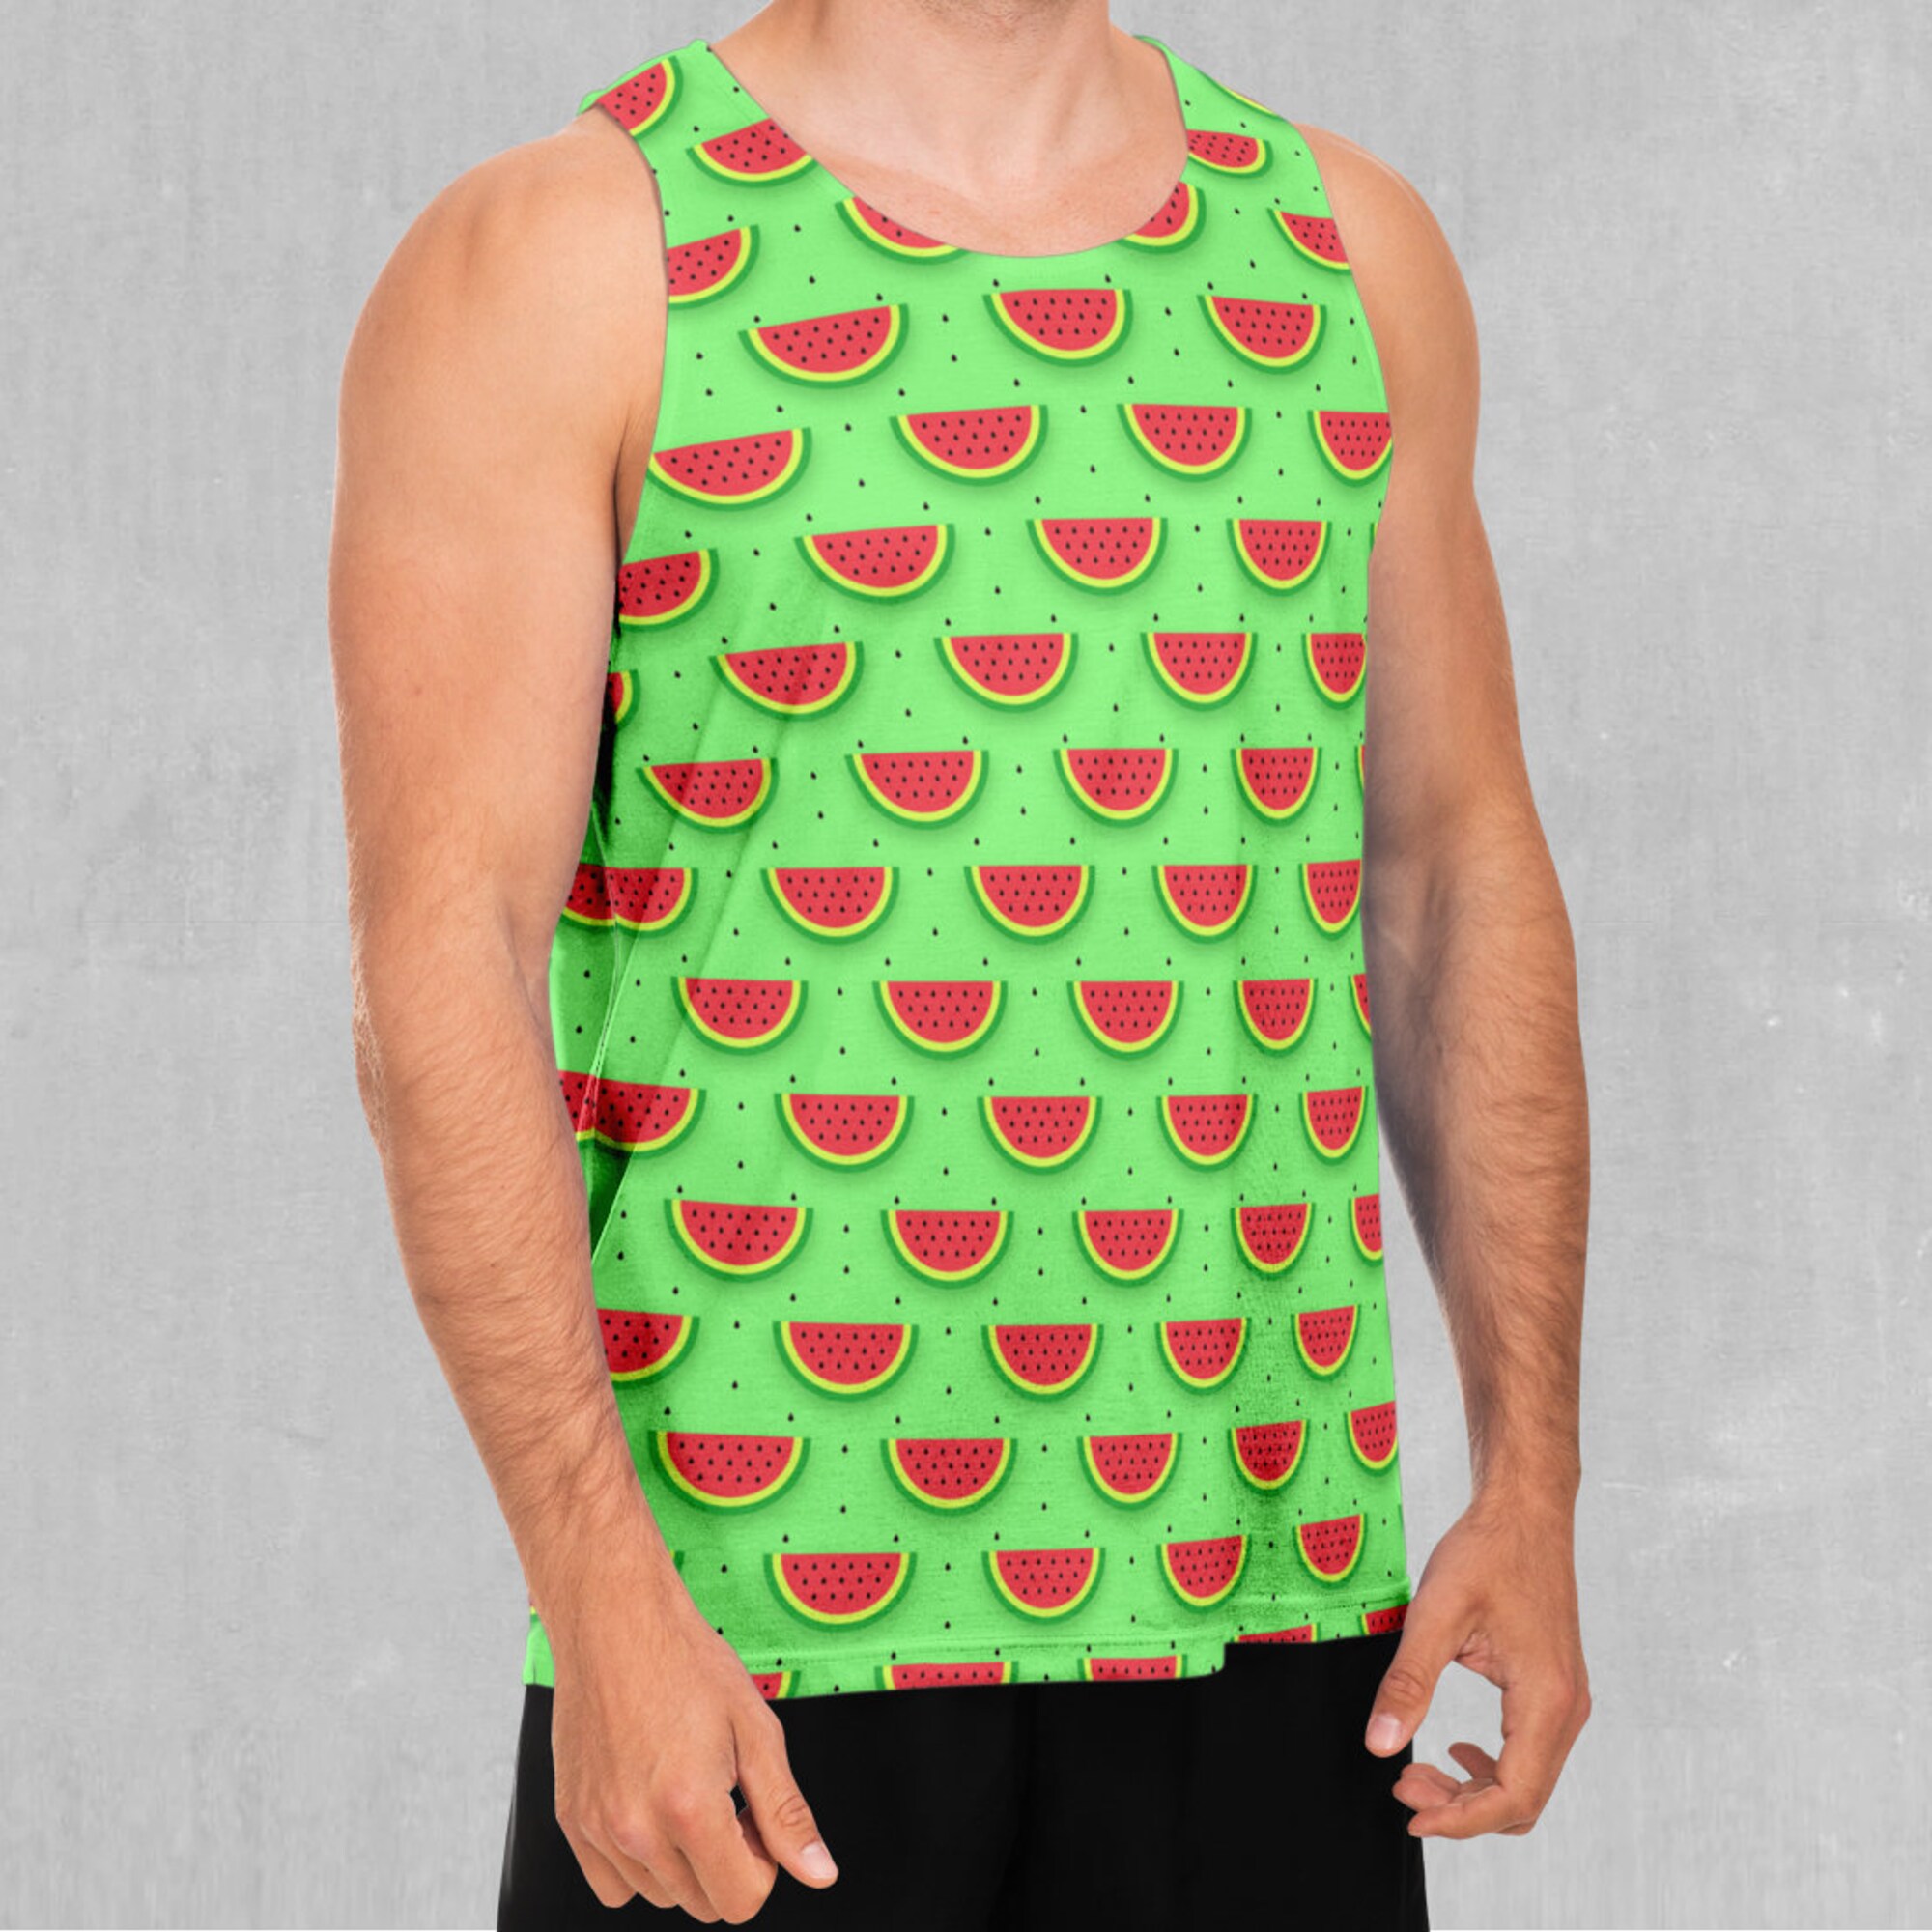 Watermelon Pattern Men's Tank Top Muscle Sleeveless Shirt